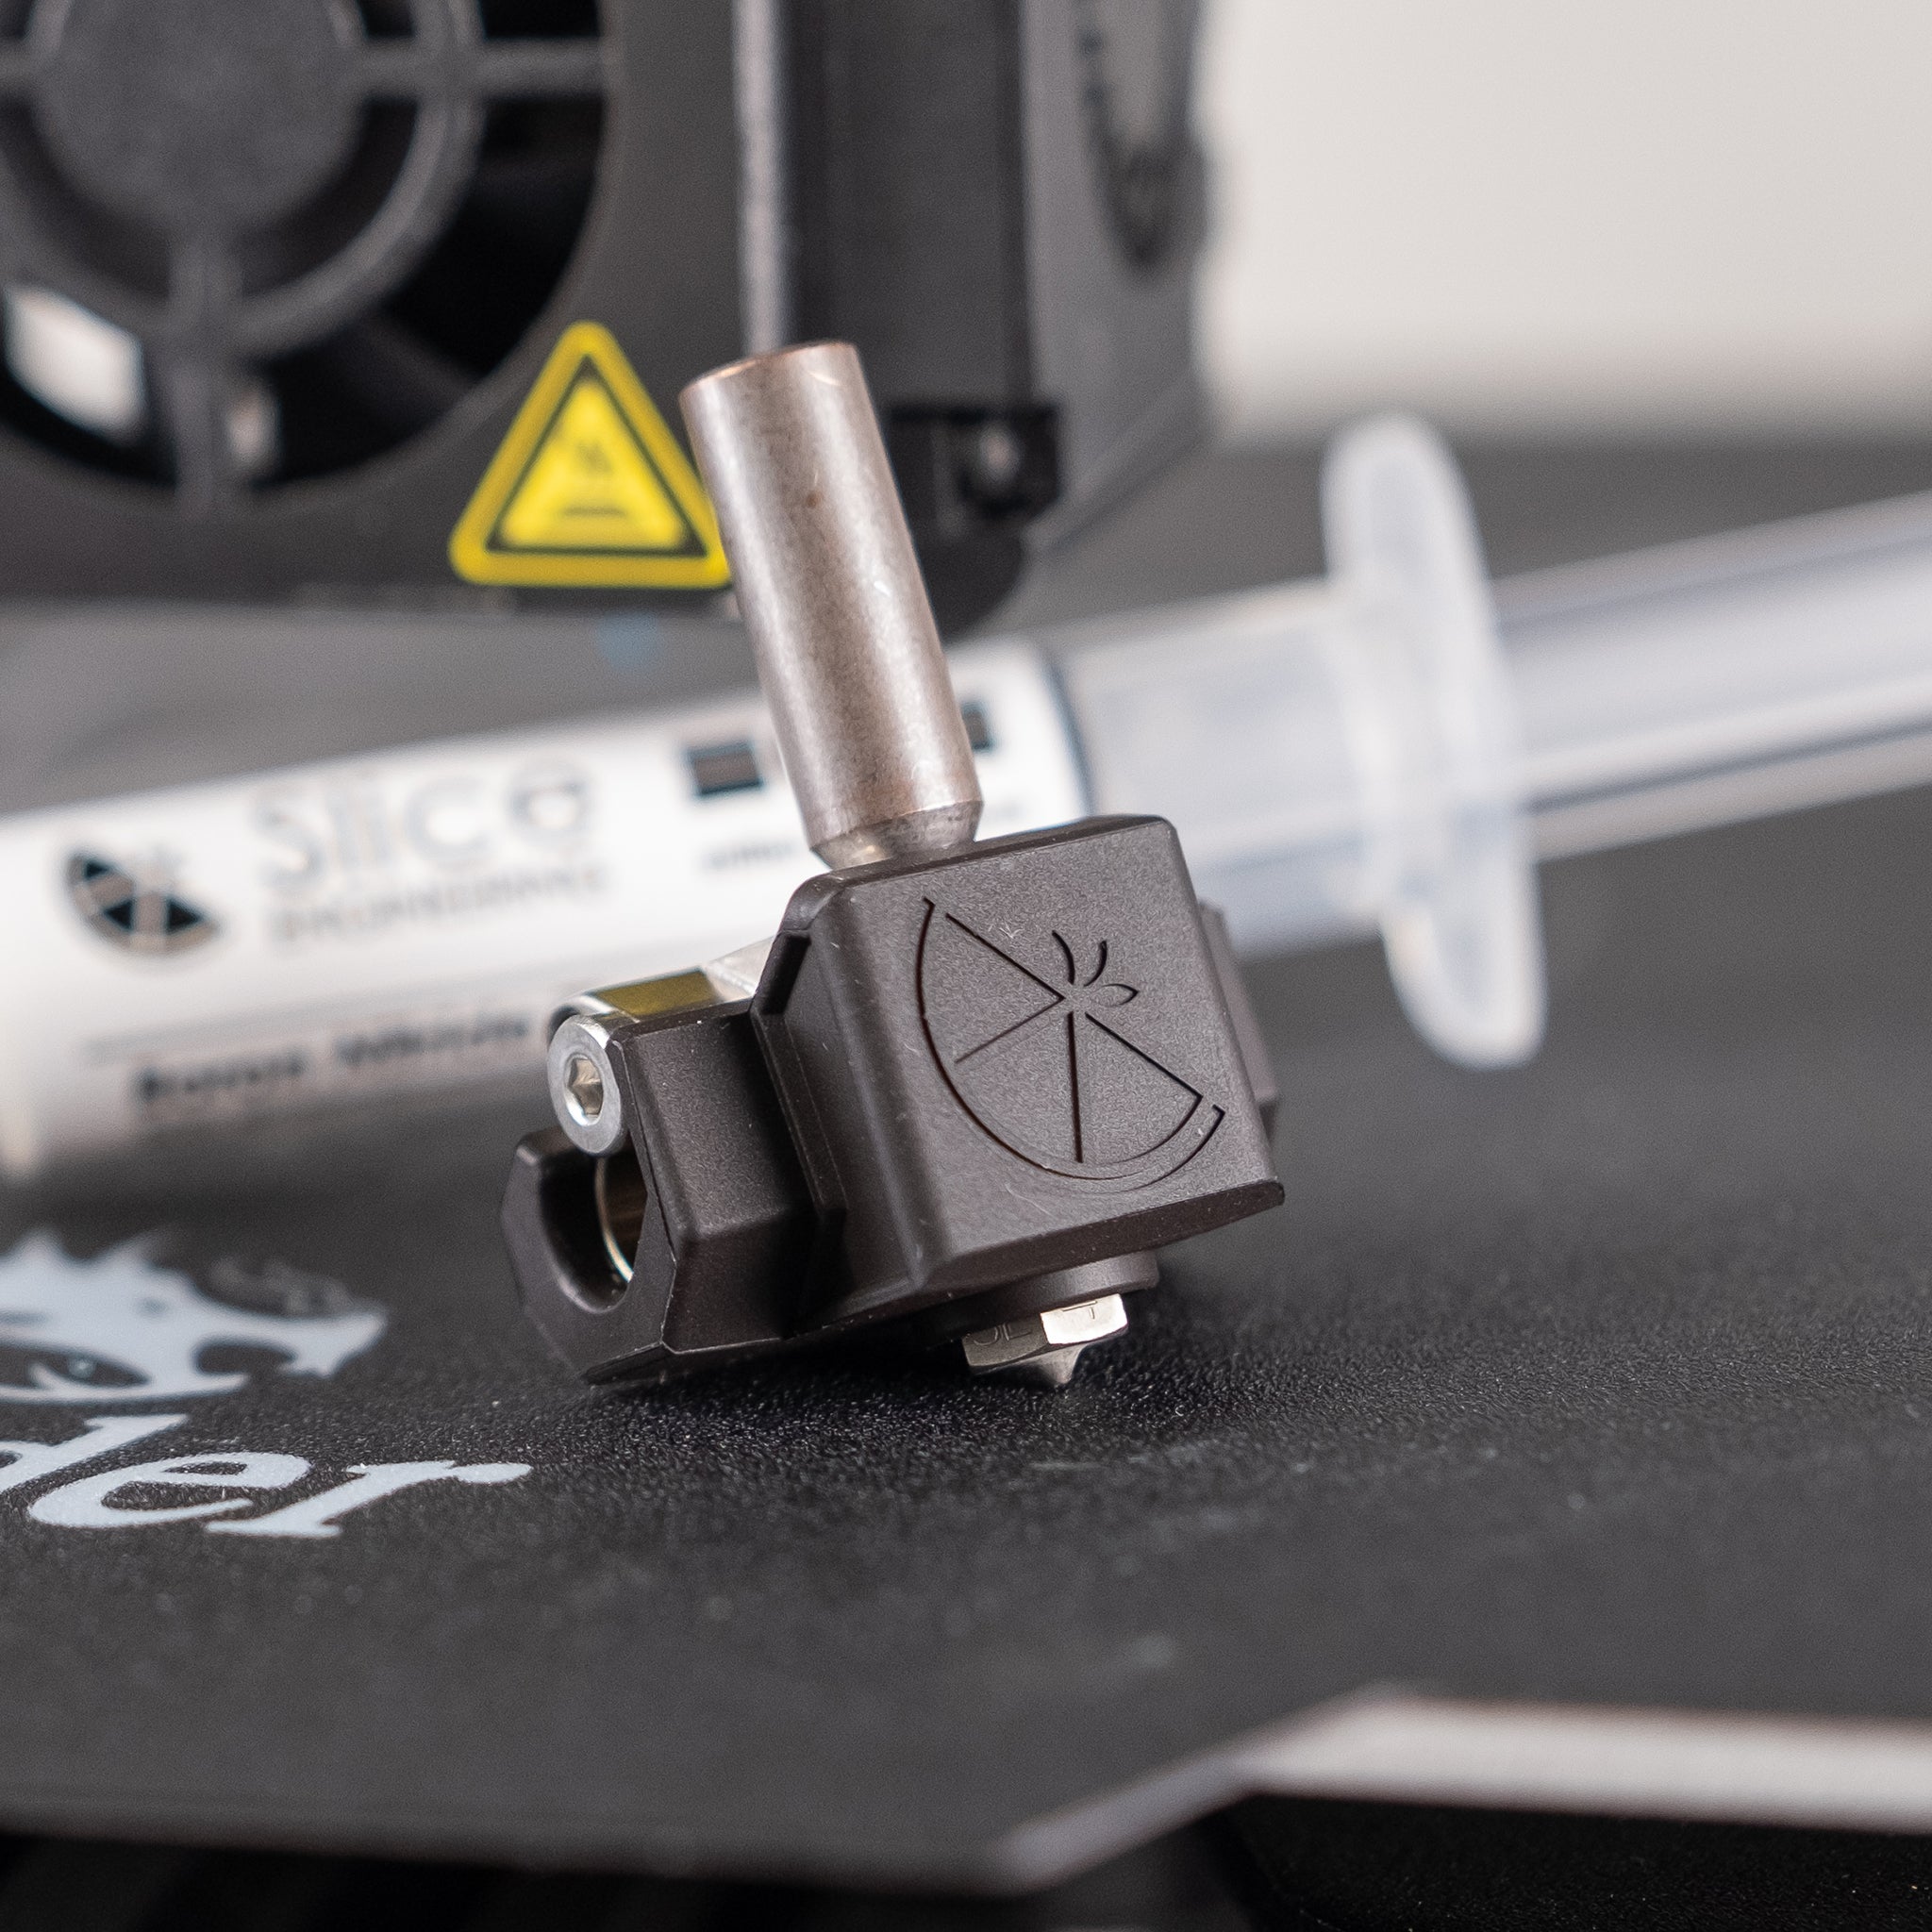 Creality Ender 3 V2 Neo Hotend Kit, 3D Printer Parts Assembled